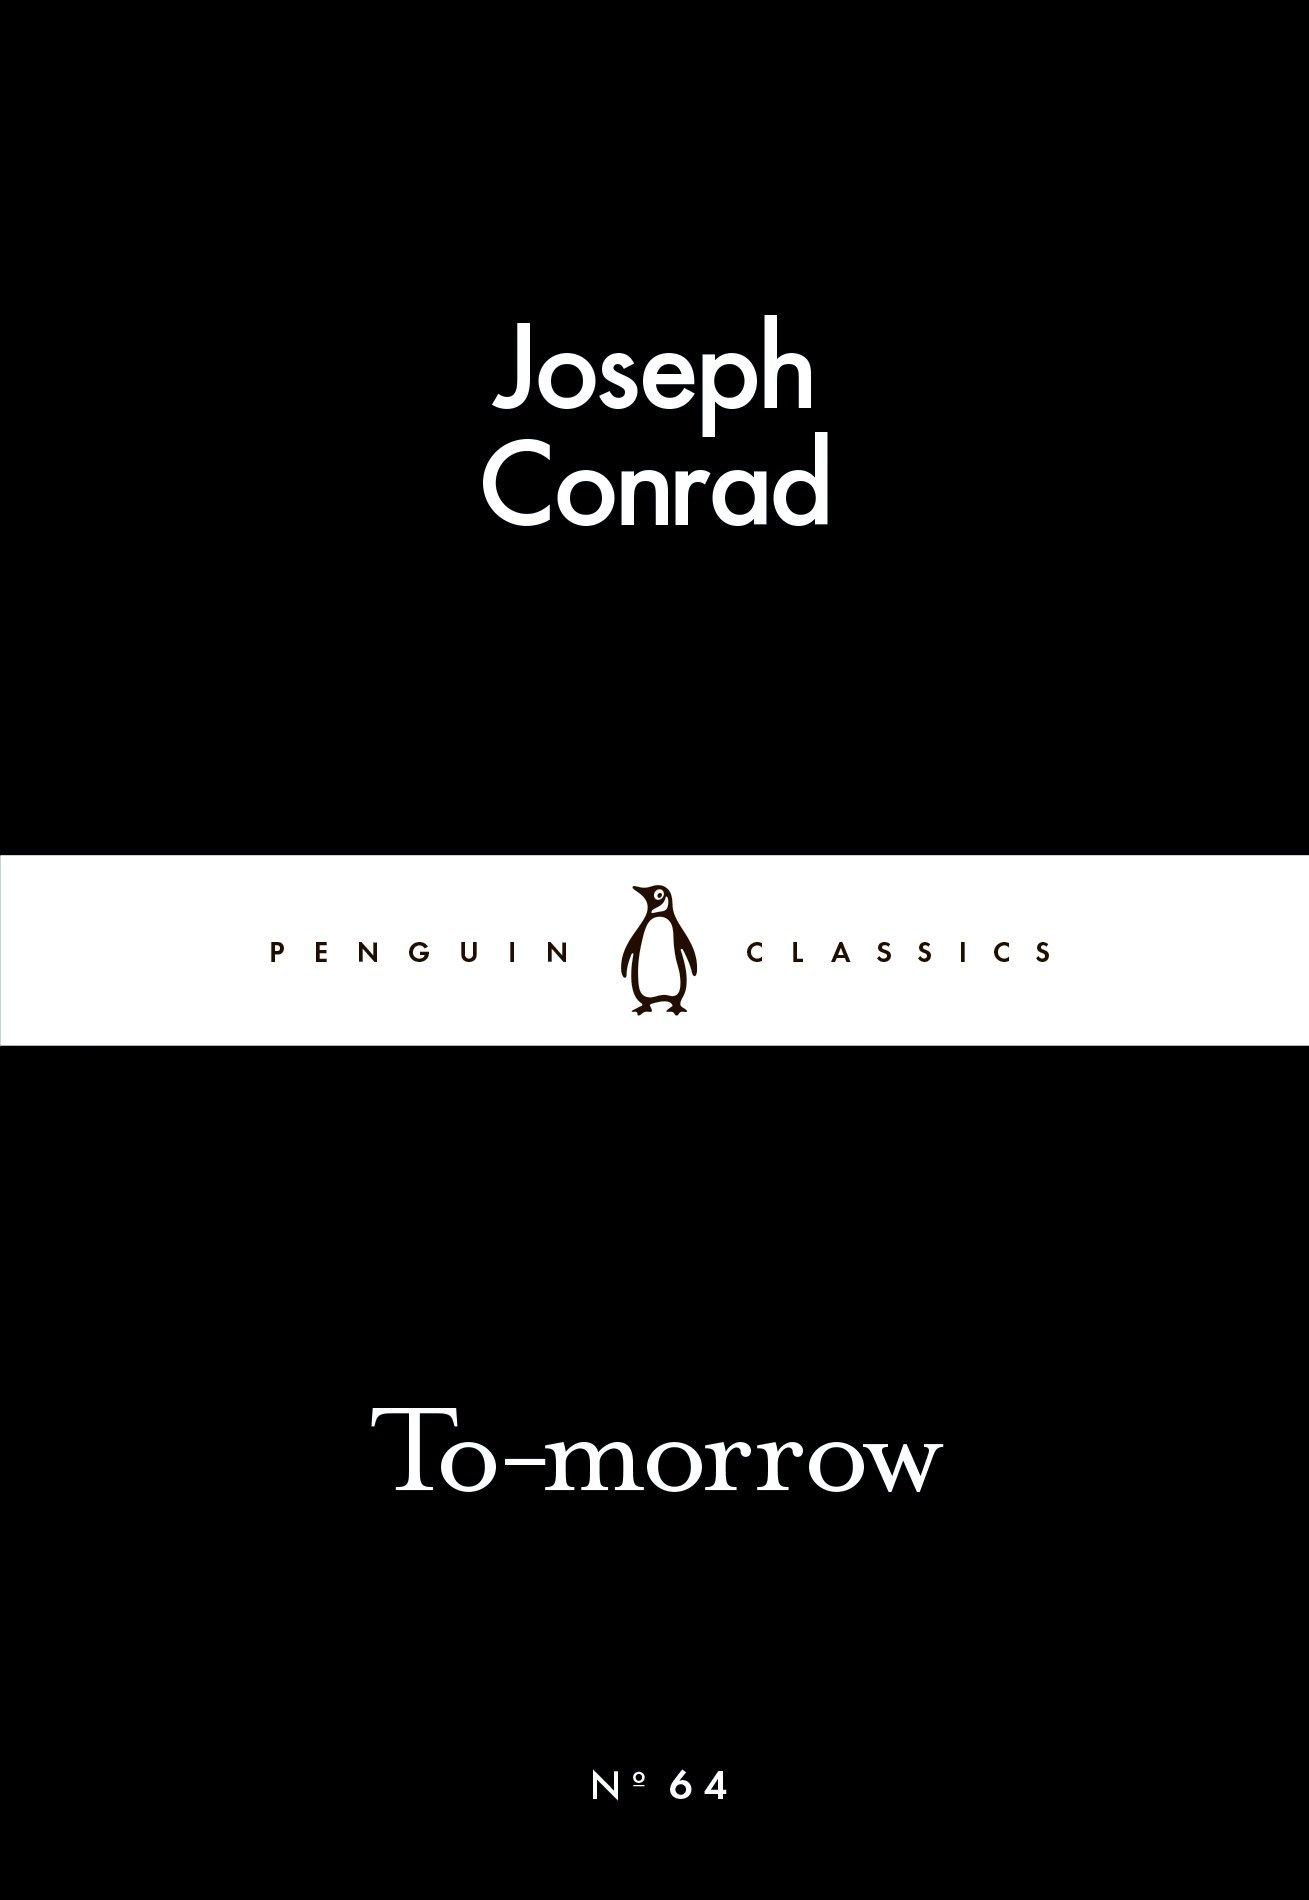 To-morrow                                                                                                                                             <br><span class="capt-avtor"> By:Conrad, Joseph                                    </span><br><span class="capt-pari"> Eur:1,12 Мкд:69</span>